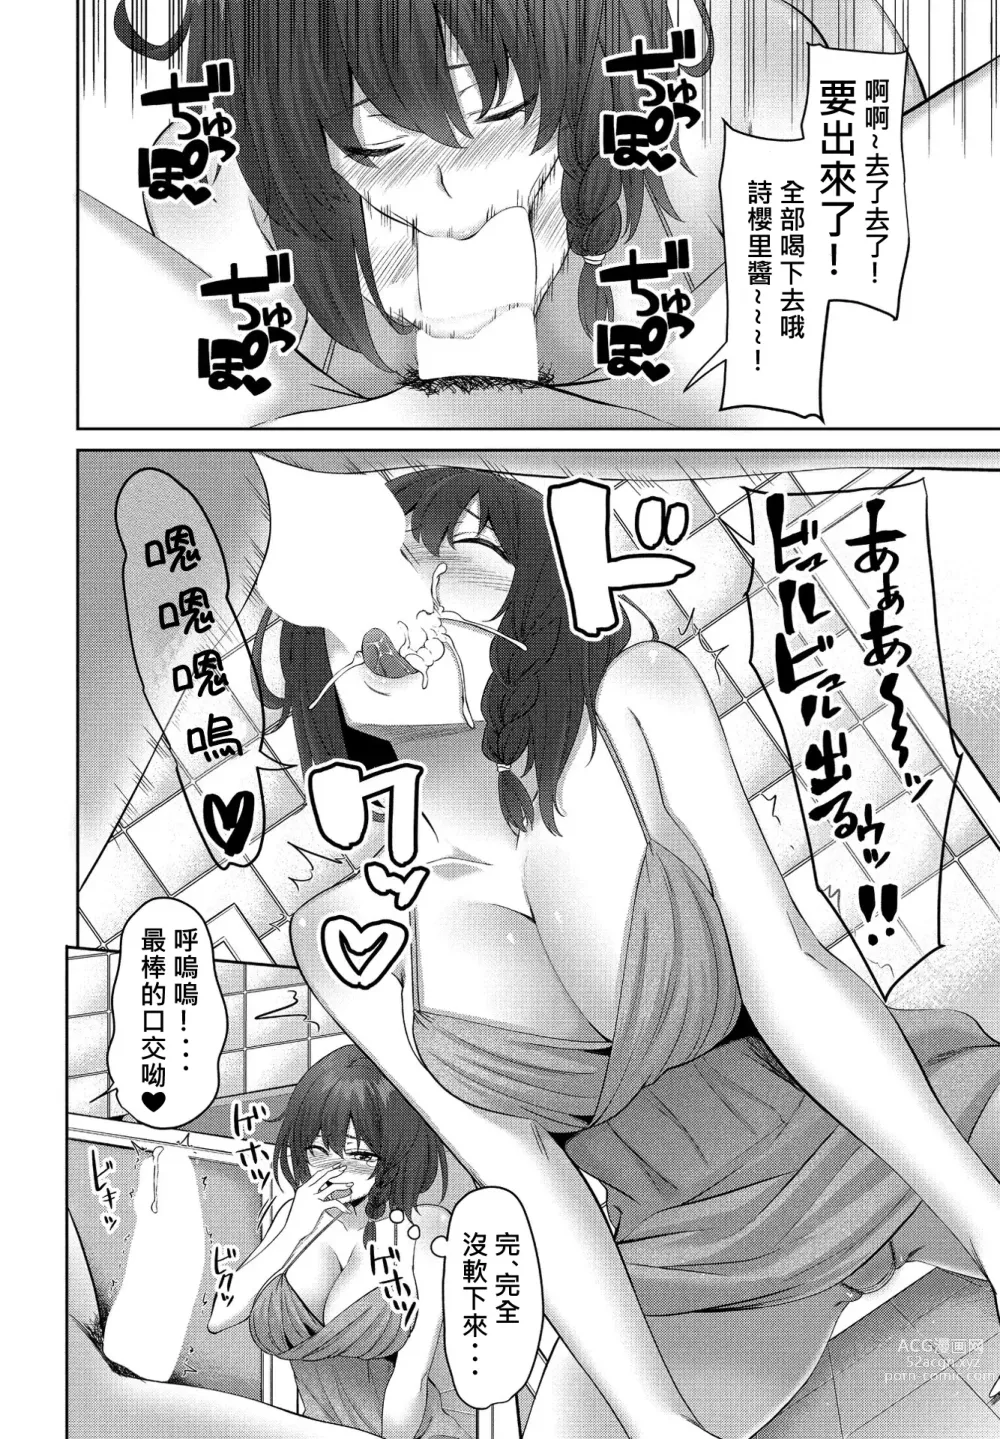 Page 7 of manga Chotto Kiite yo! Ch. 4